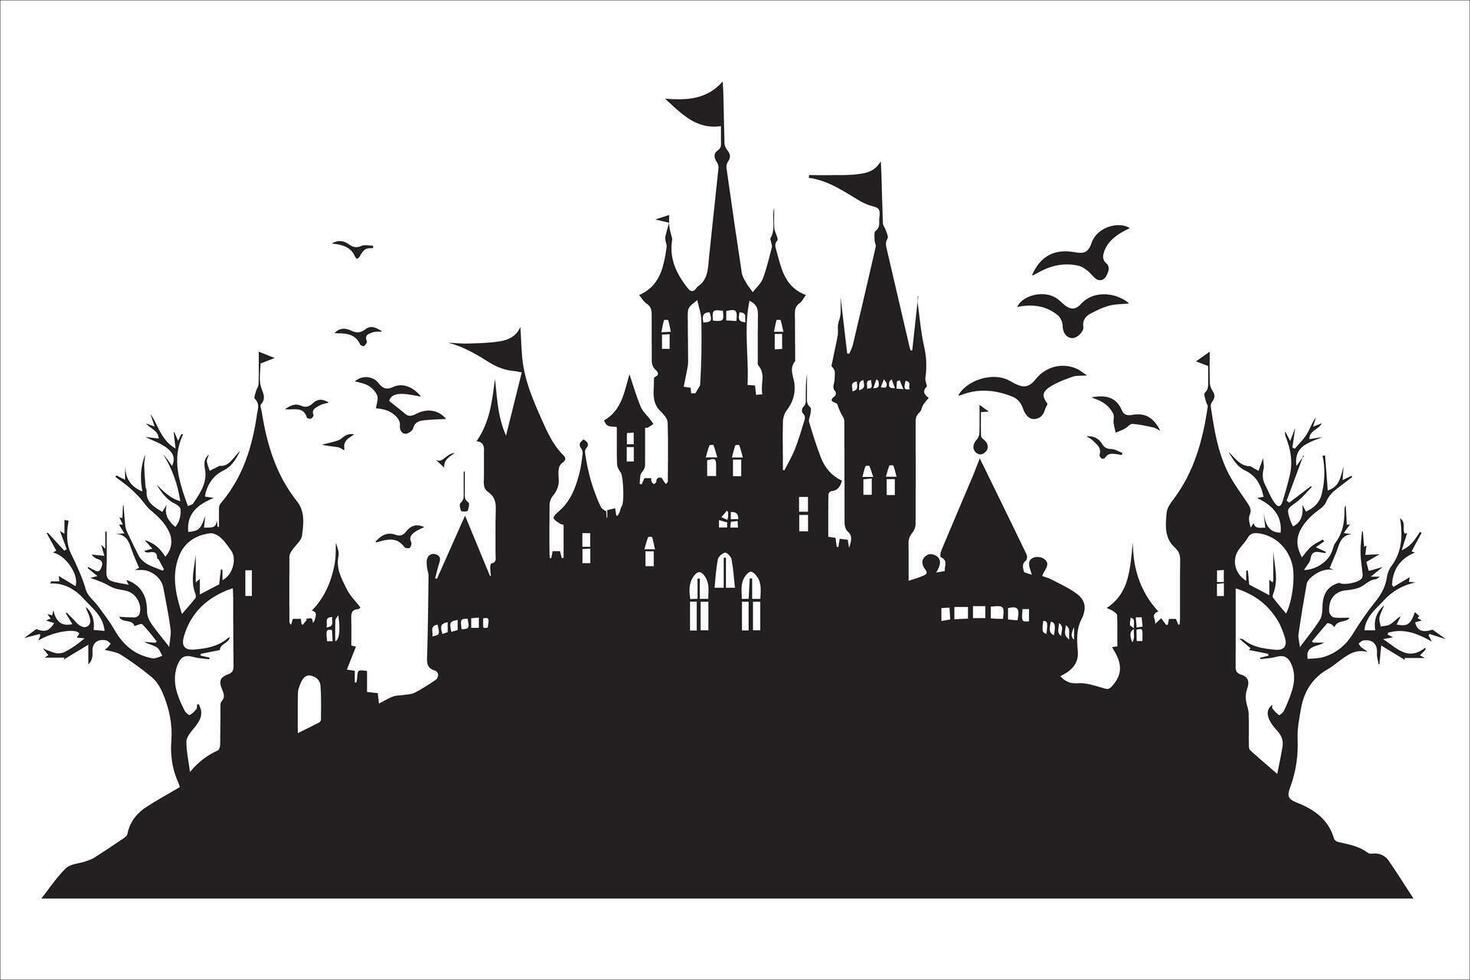 Halloween strega Casa silhouette design vettore